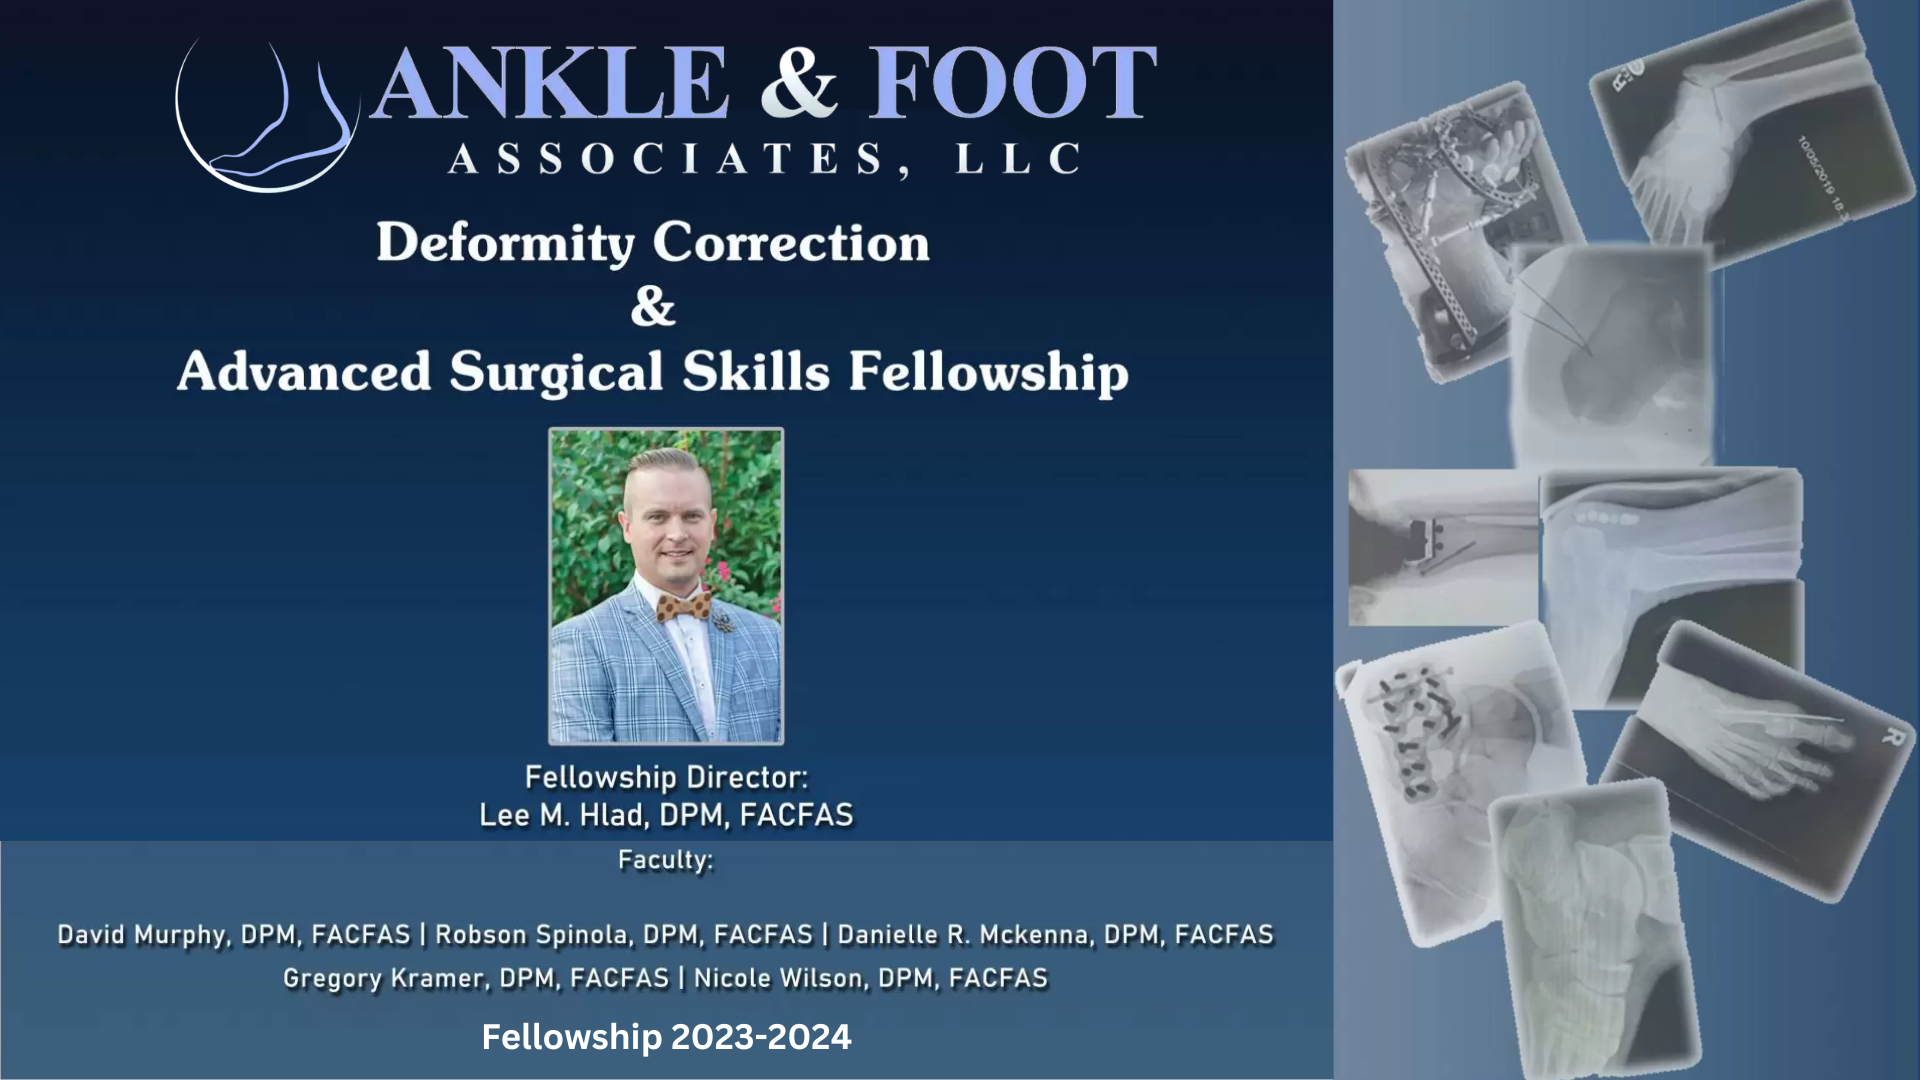 Ankle & Foot Associates deformity correction and advanced surgical skills fellowship - fellowship director Lee Hlad, DPM, FACFAS